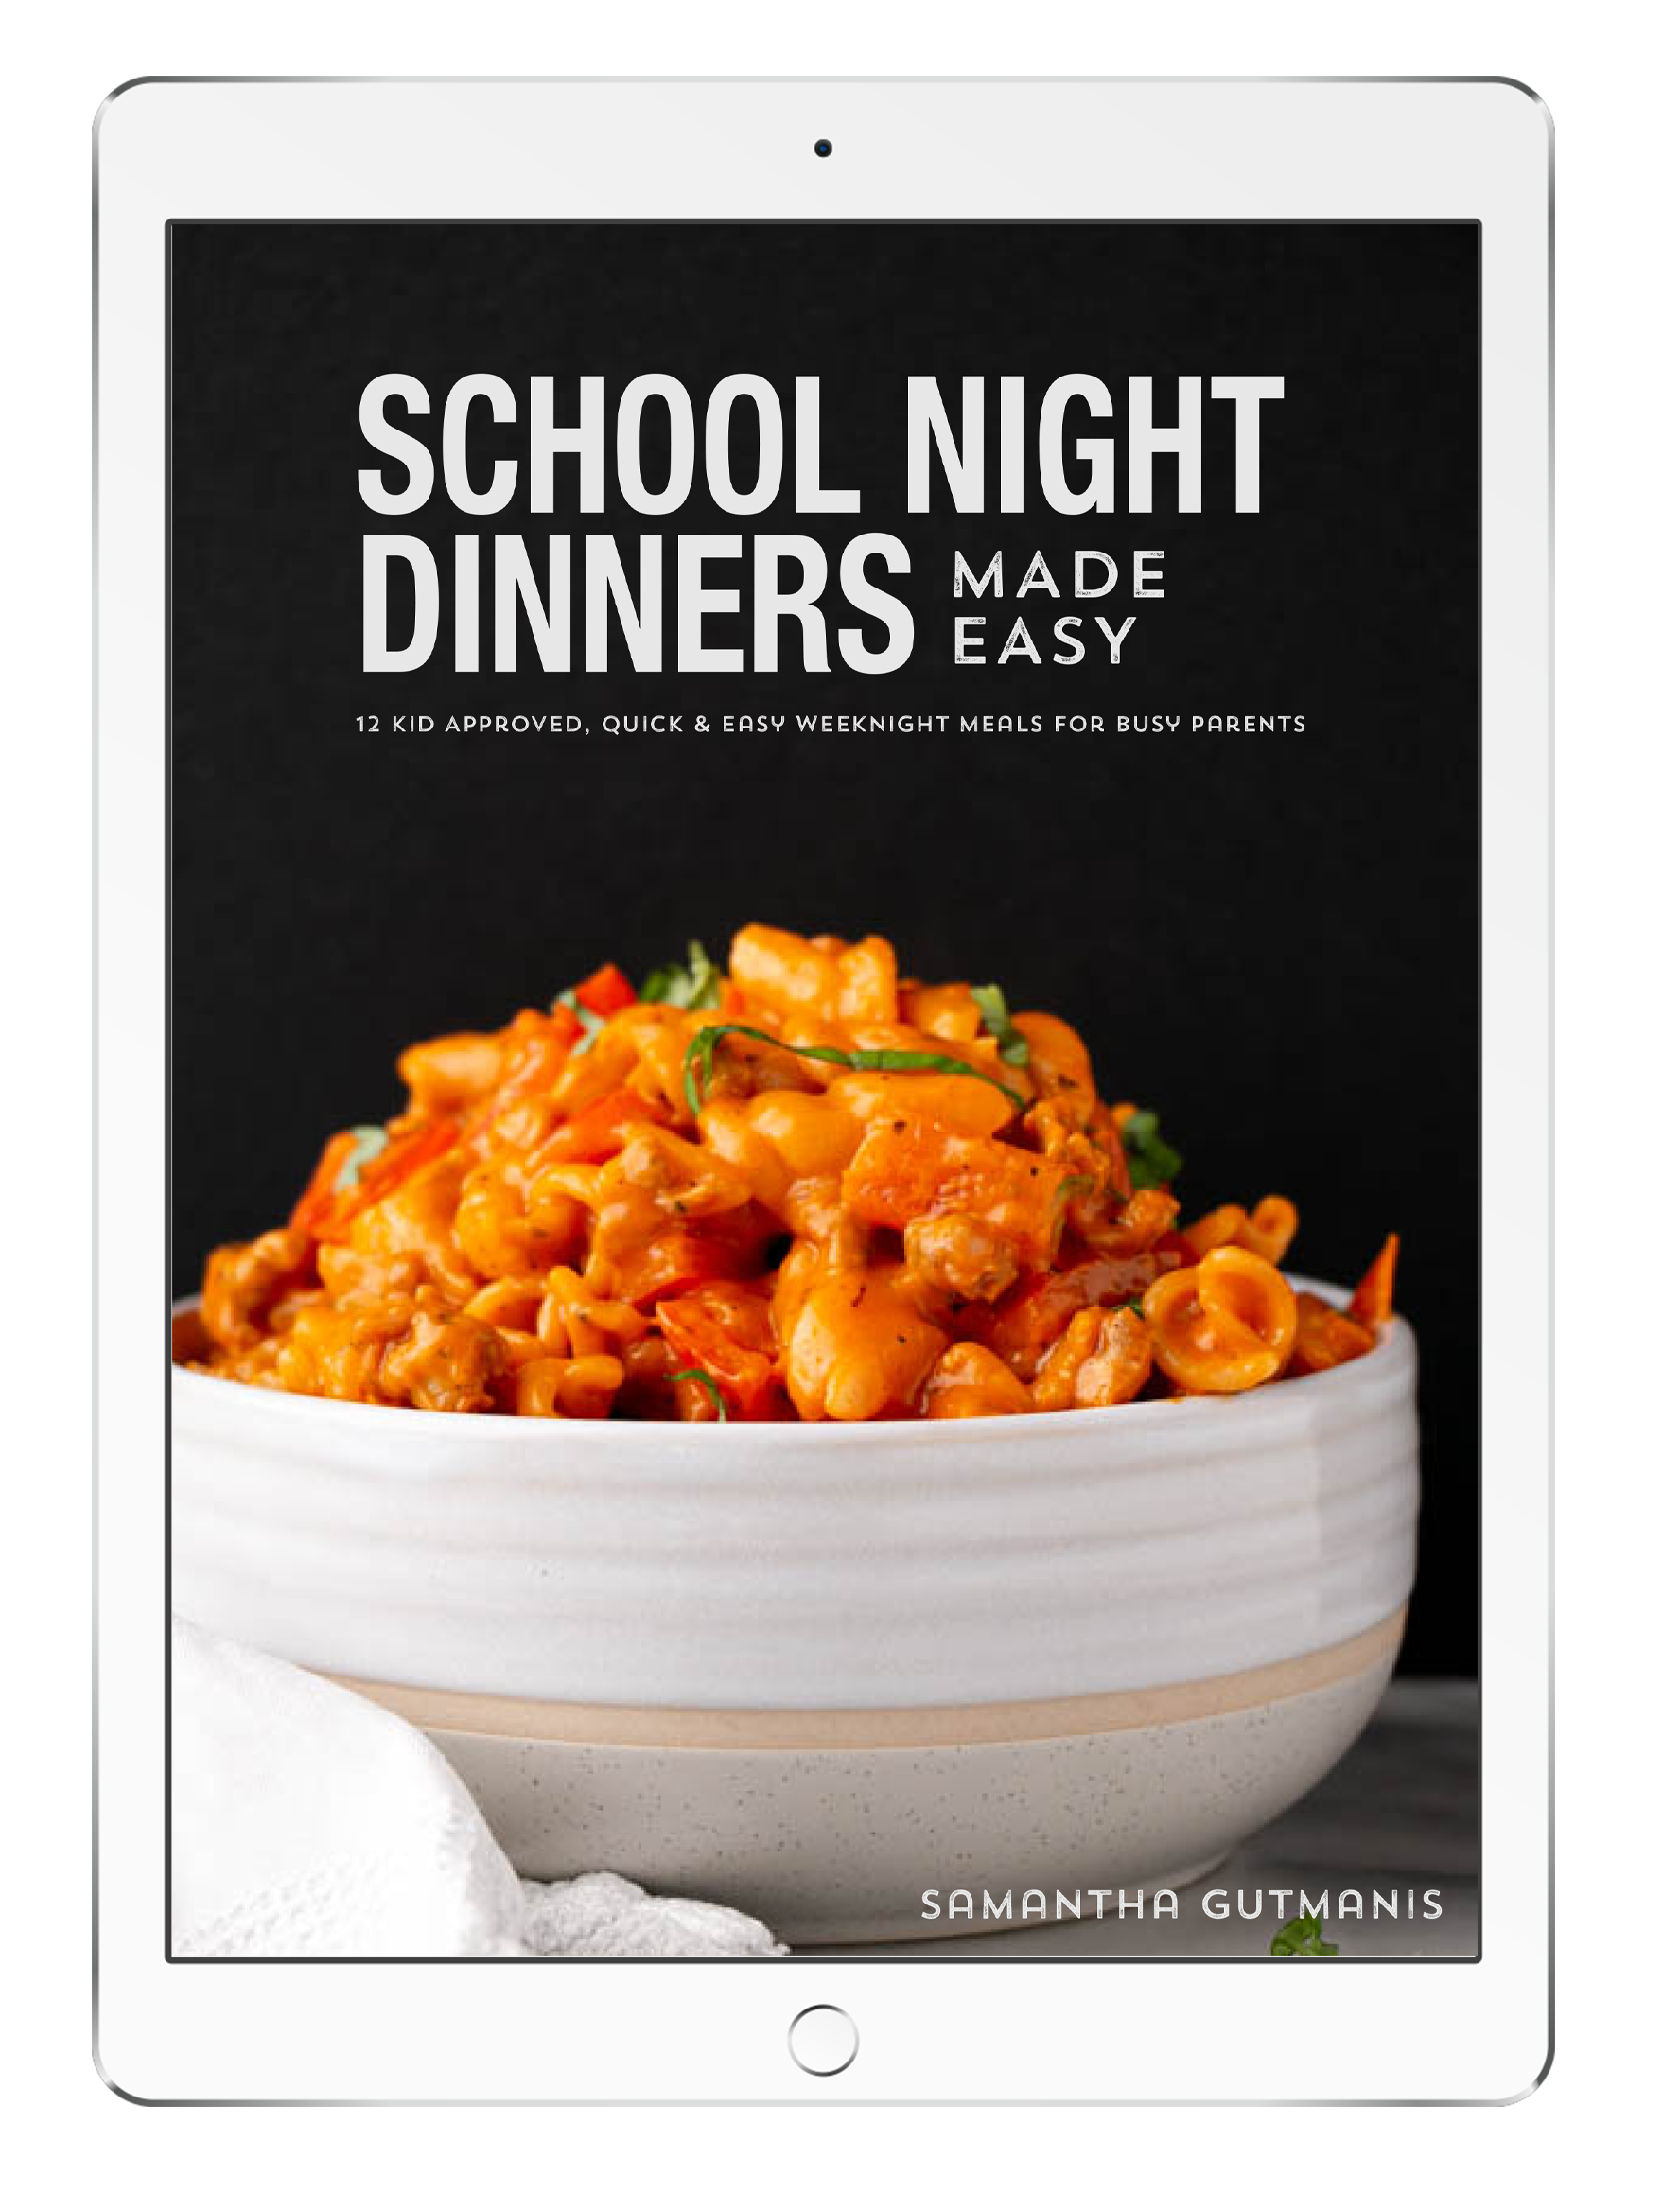 School Night Dinners by Samantha Gutmanis